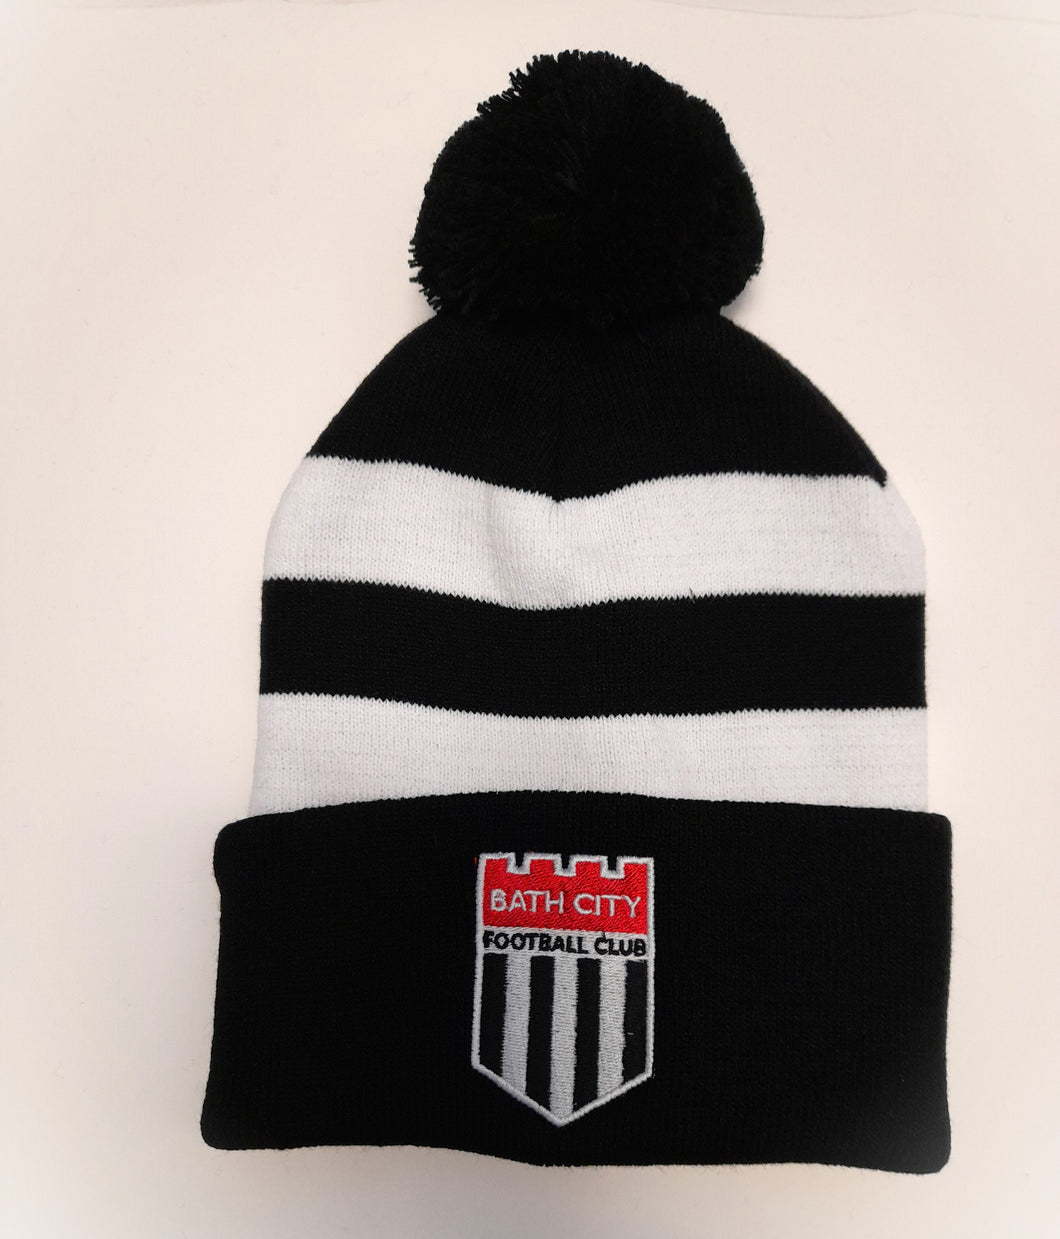 Bobble Hat - Black and White Striped